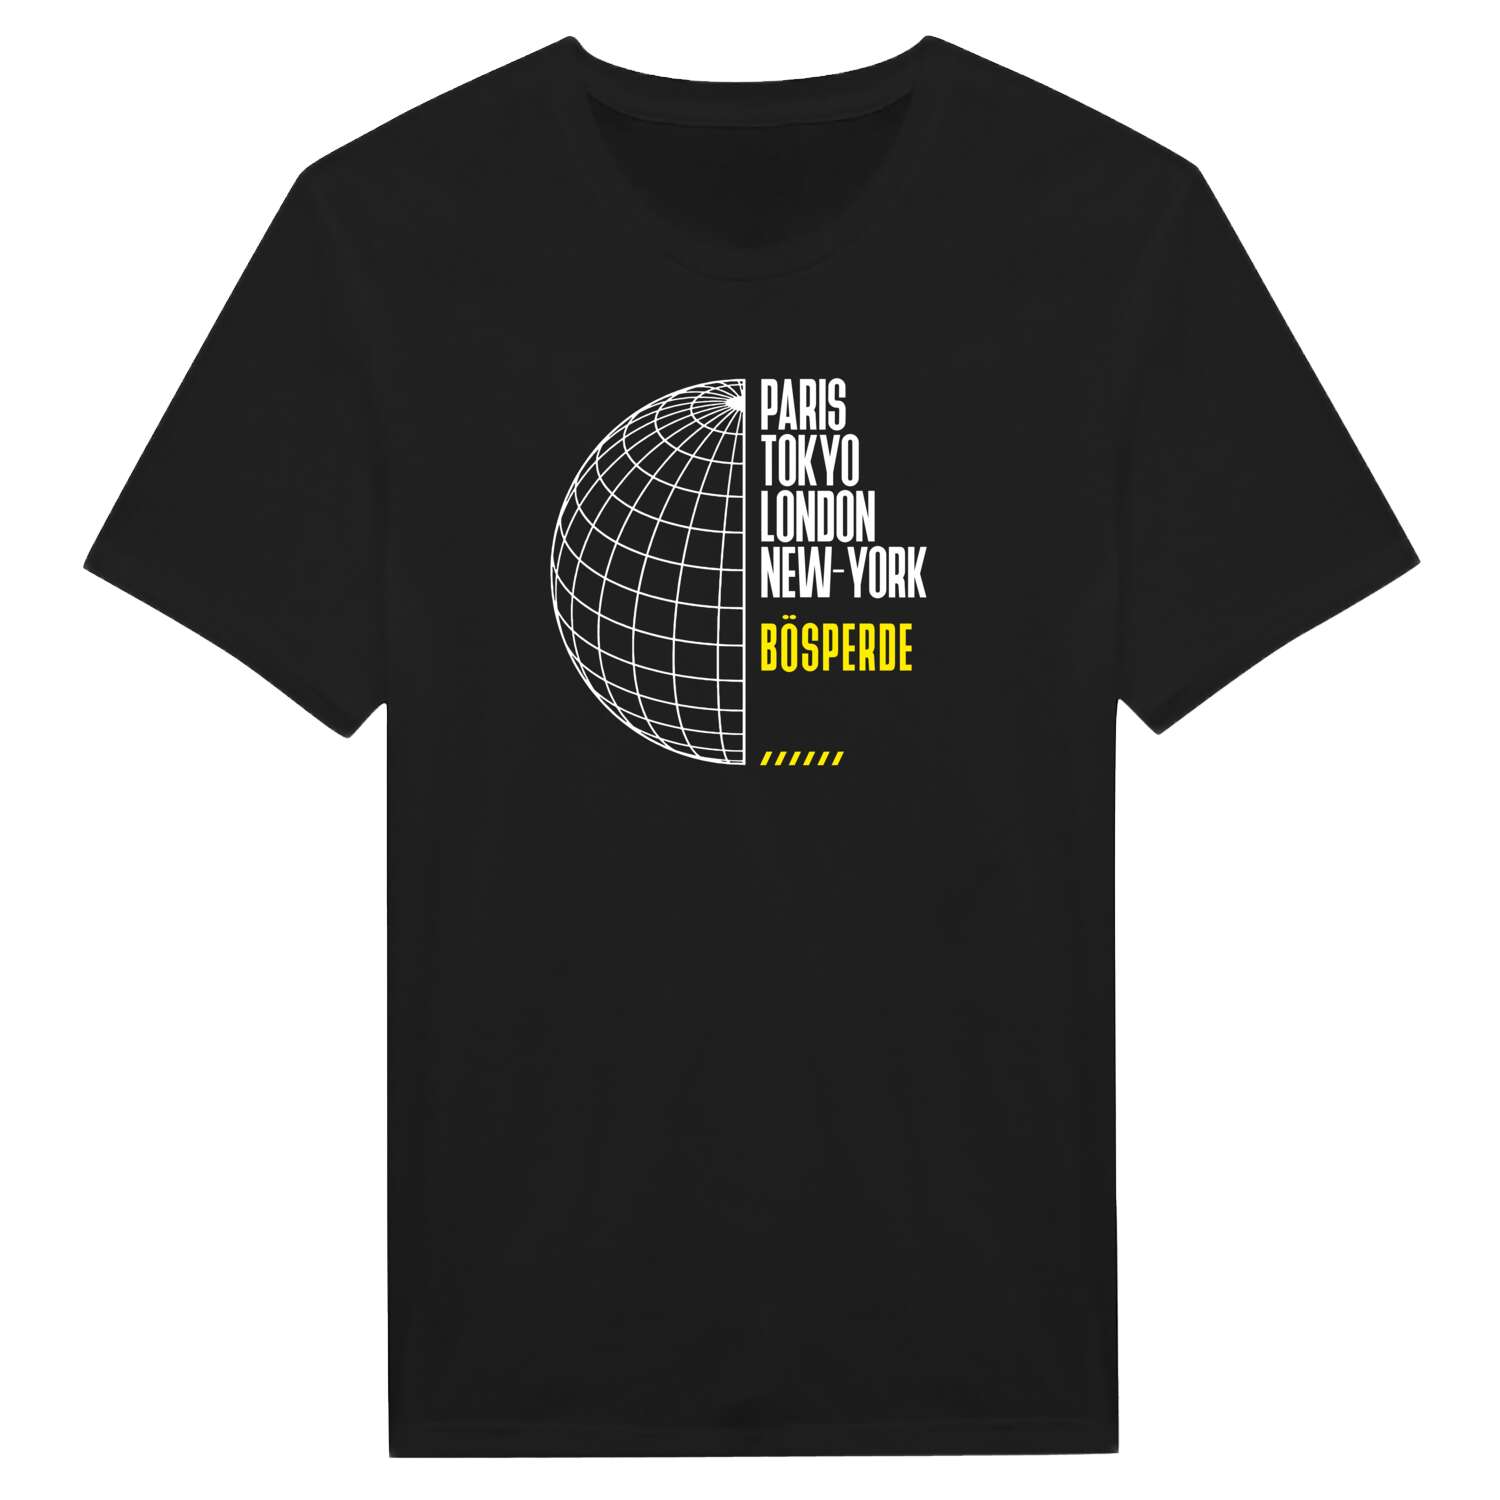 Bösperde T-Shirt »Paris Tokyo London«